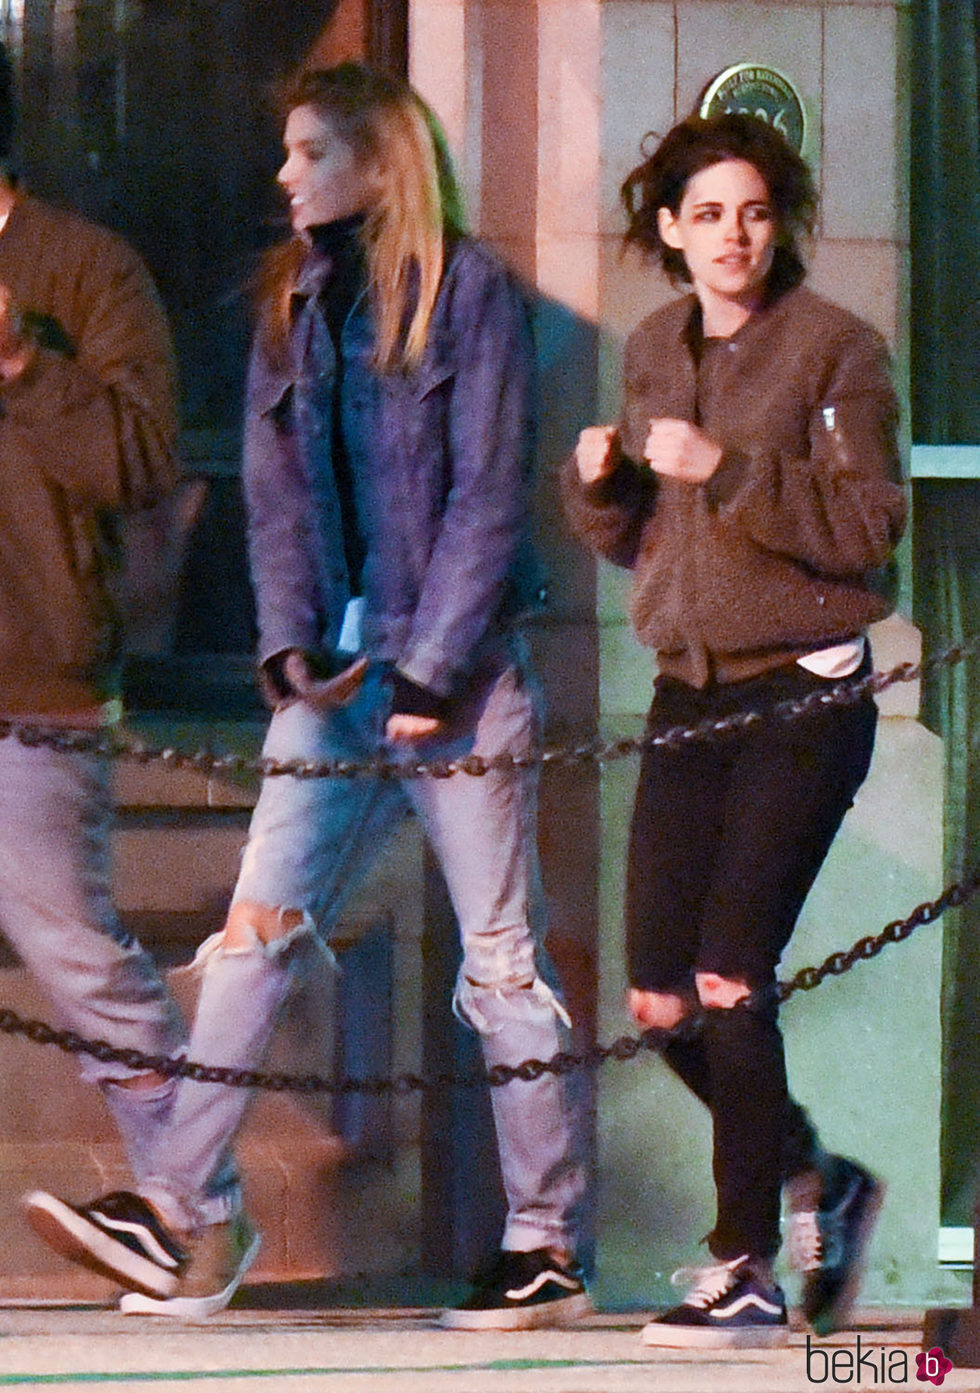 Kristen Stewart y Stella Maxwell saliendo de un billar en Georgia